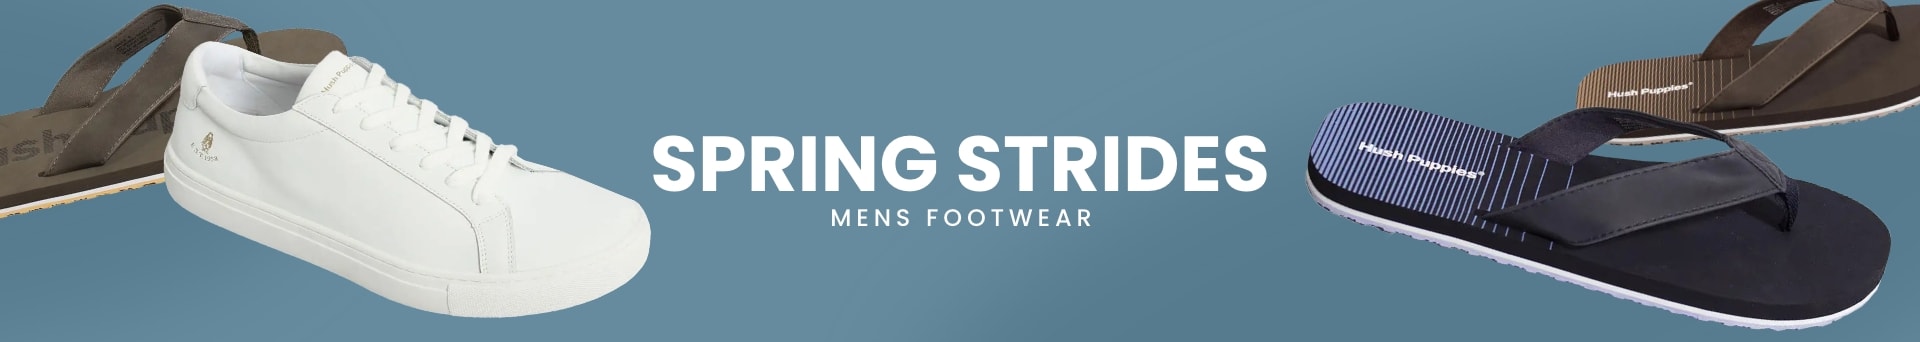 Mens Footwear Collection Banner - Desktop